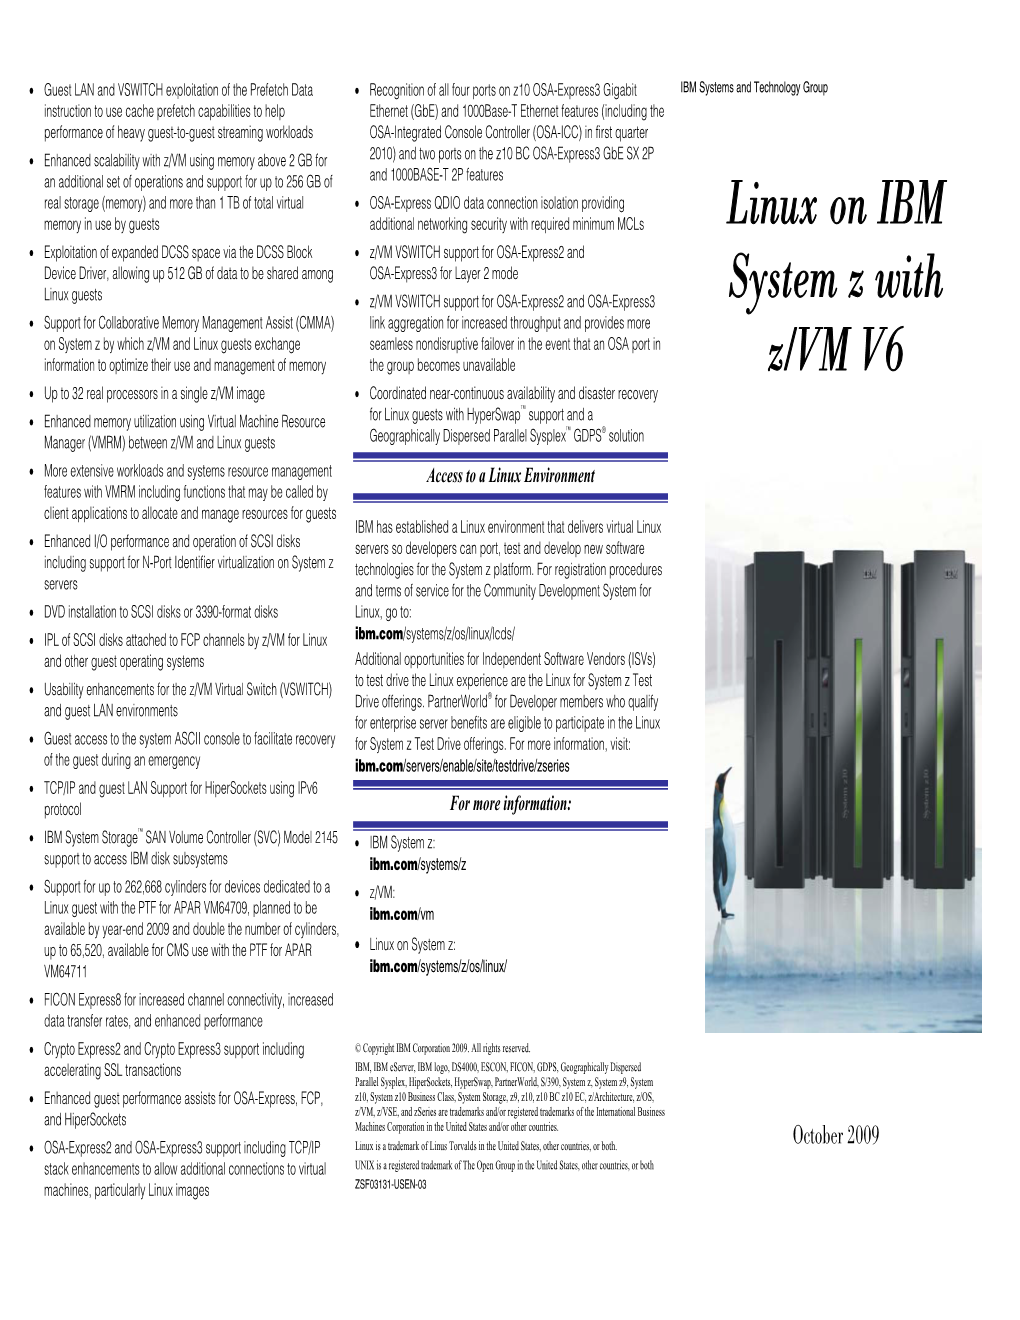 Linux on IBM System Z with Z/VM V6